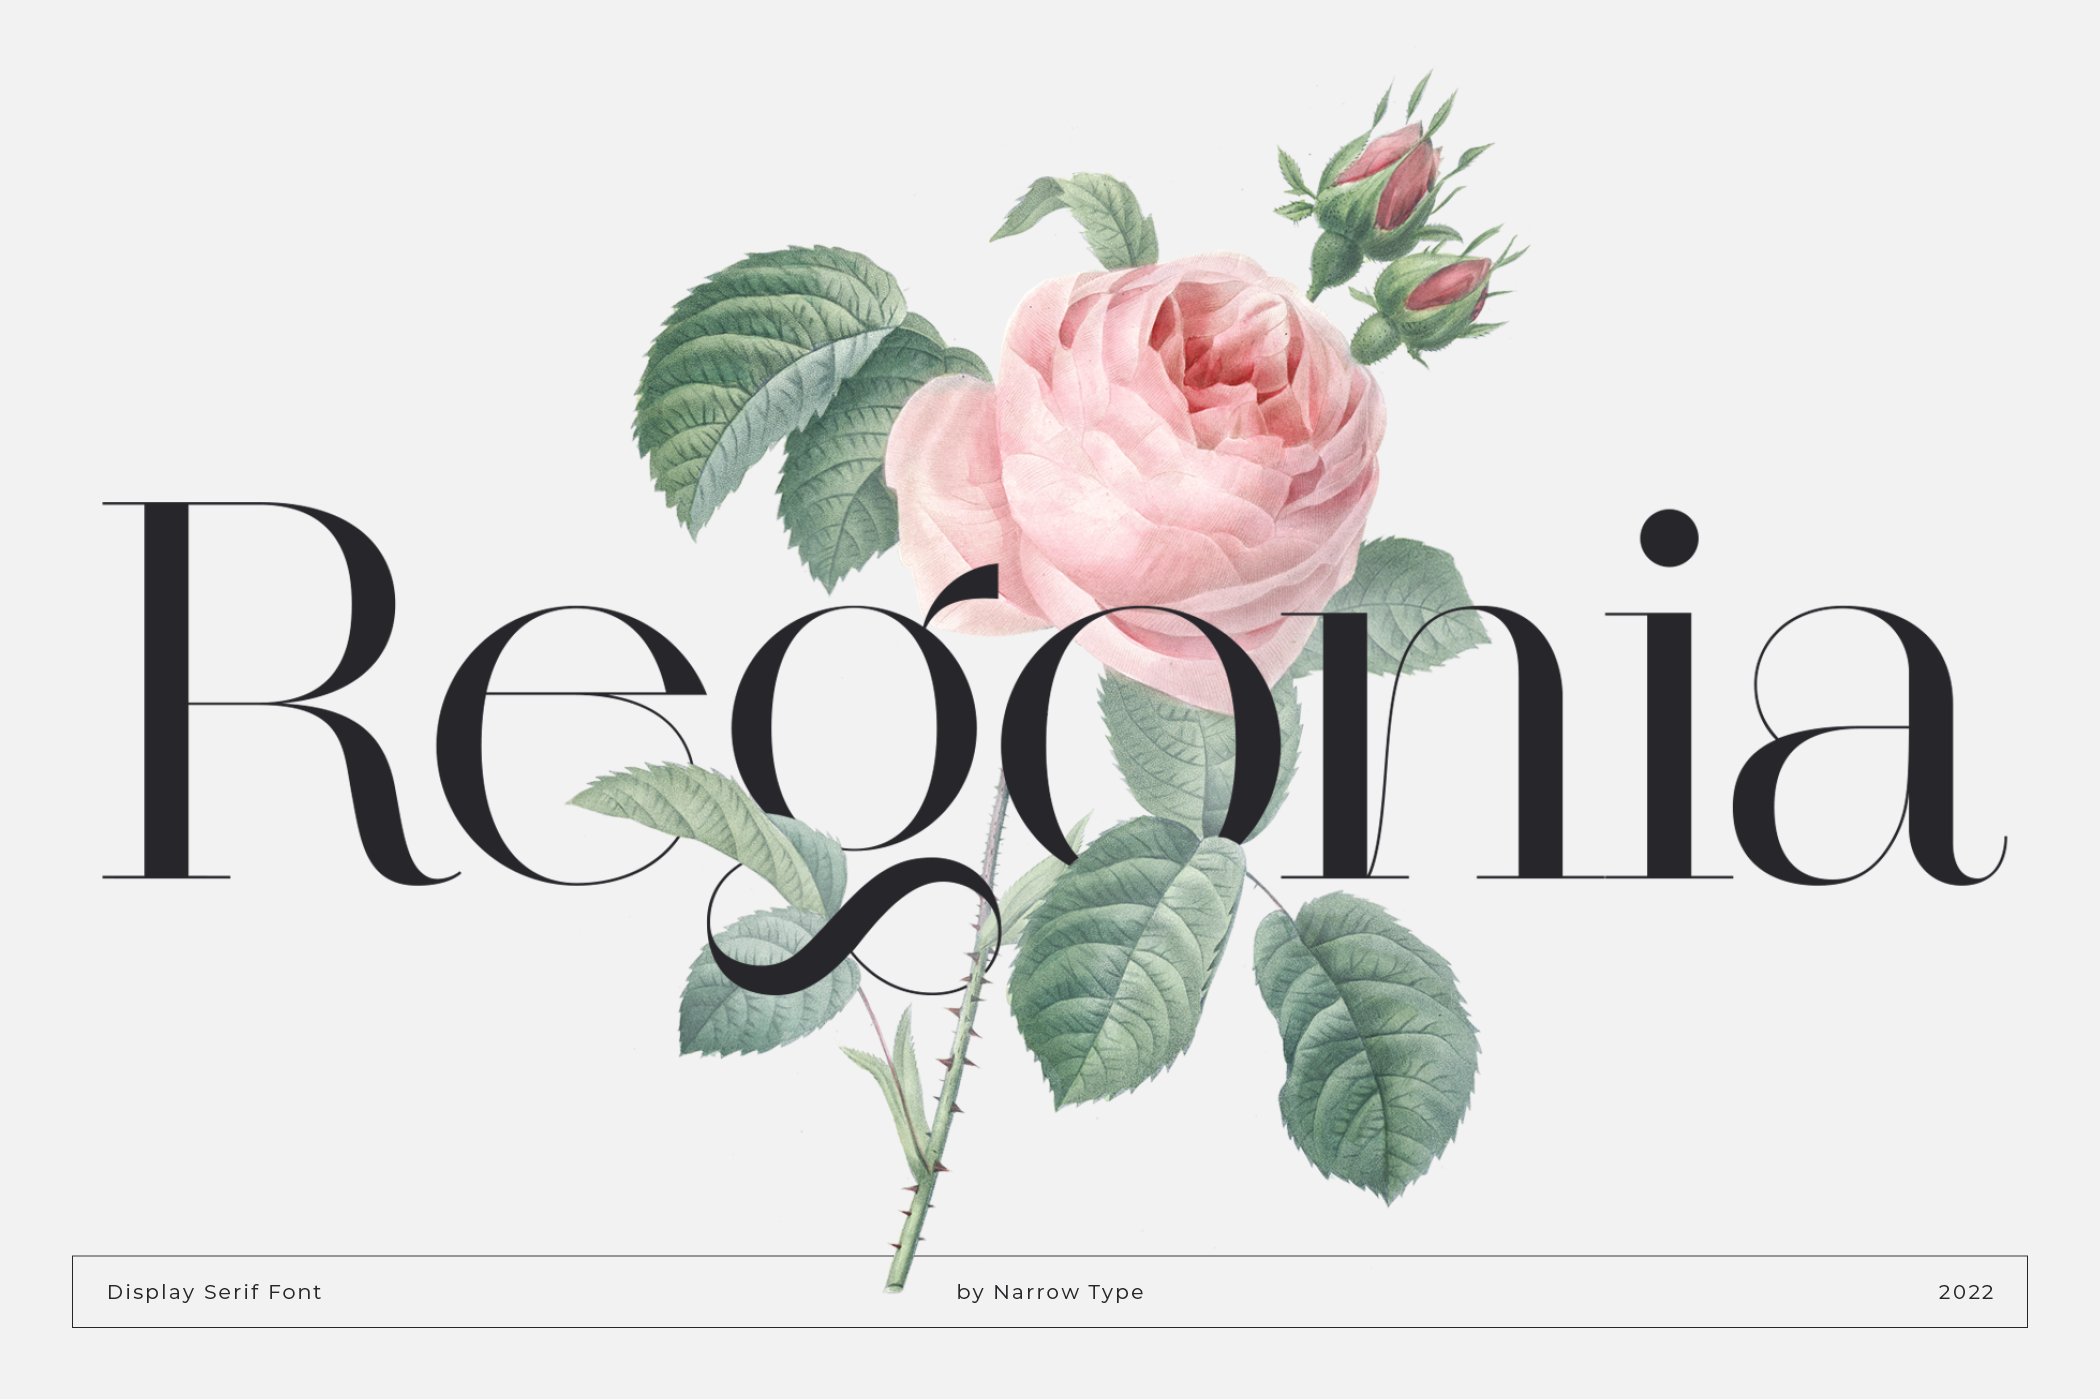 Regonia Display Serif Typeface cover image.